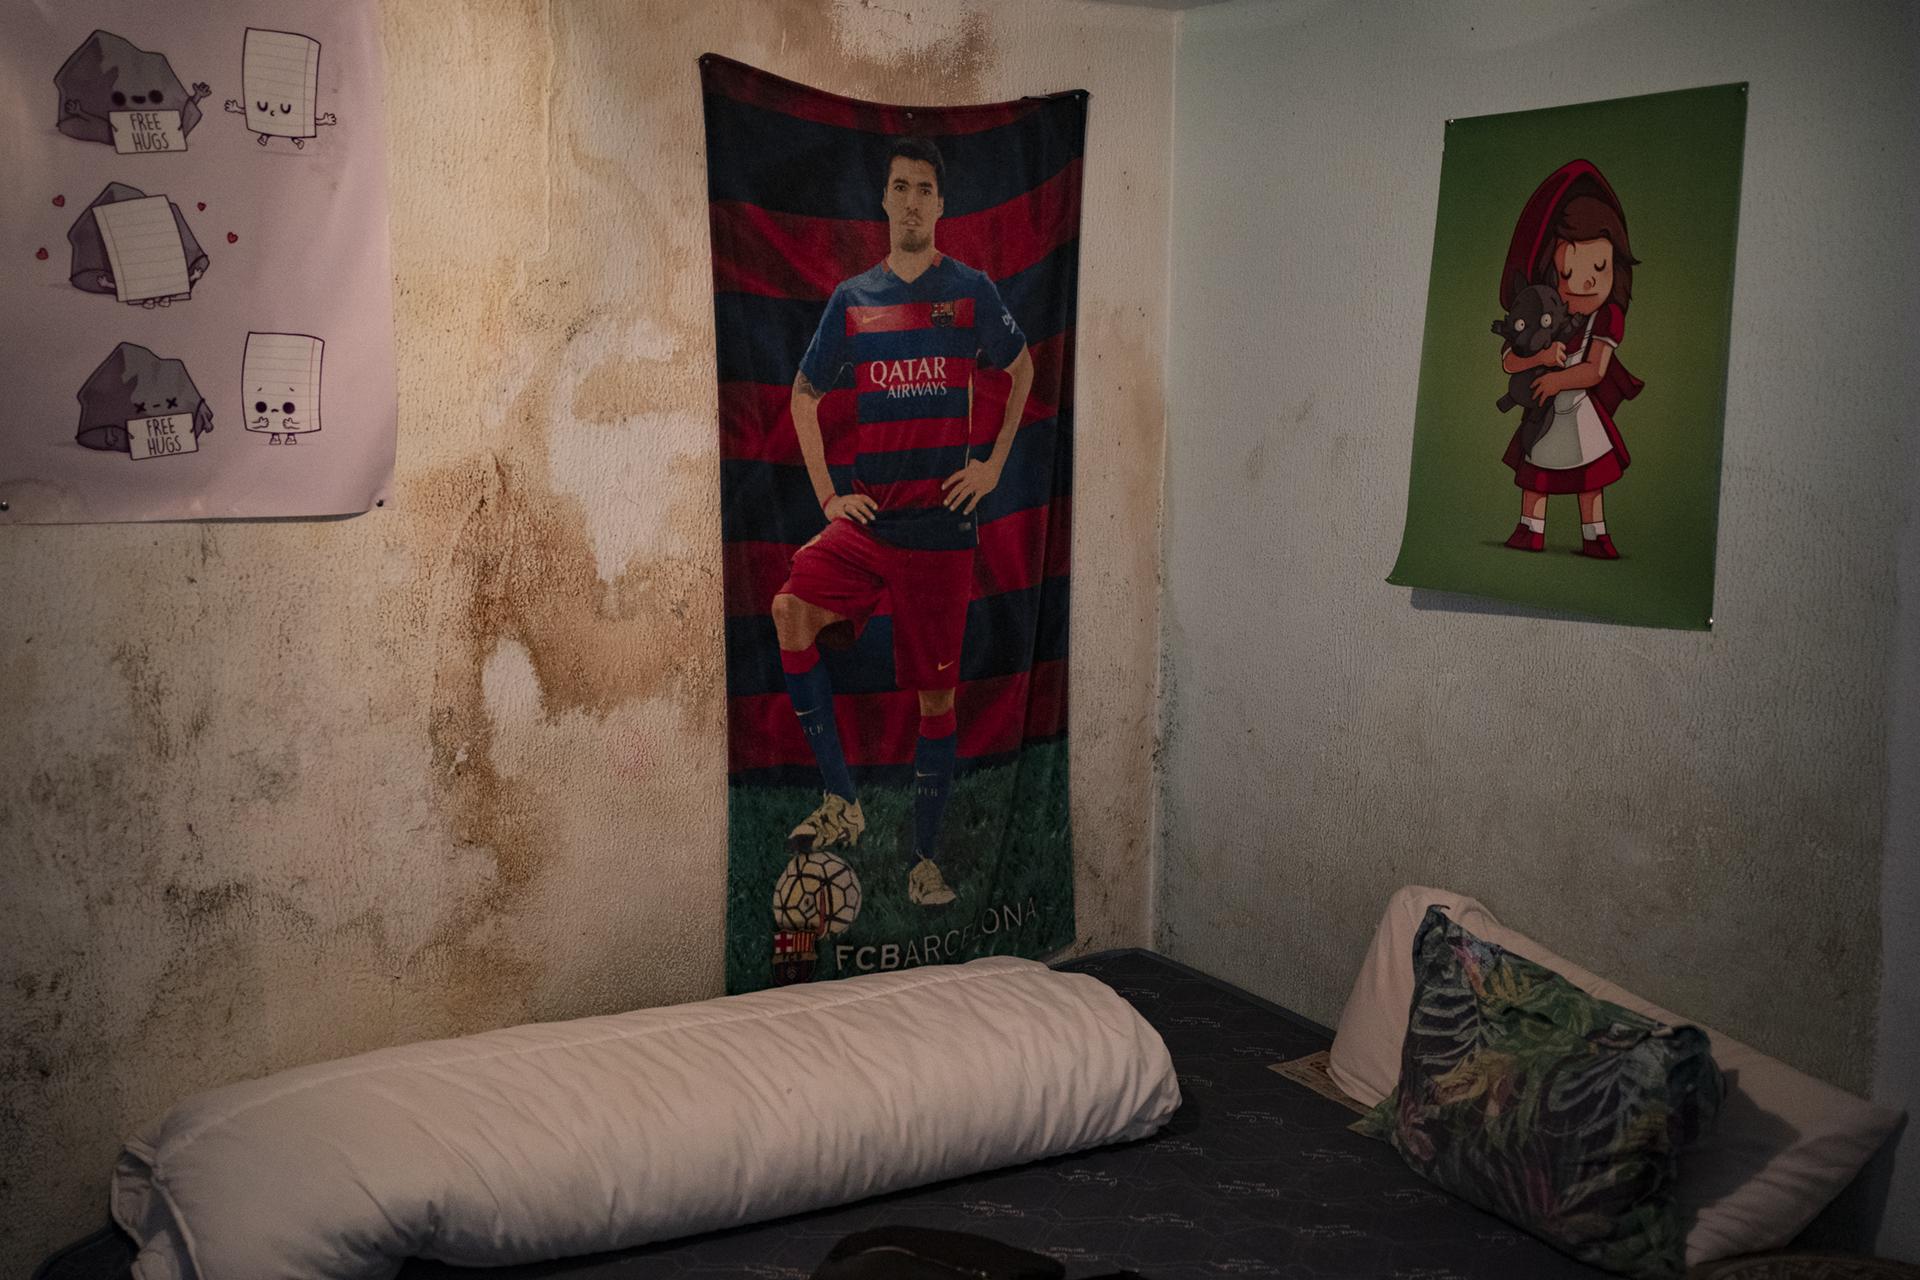 Barcelona Housing Crisis (ongoing) -  Soccer player Luis SuaÌrez poster is seen in the...